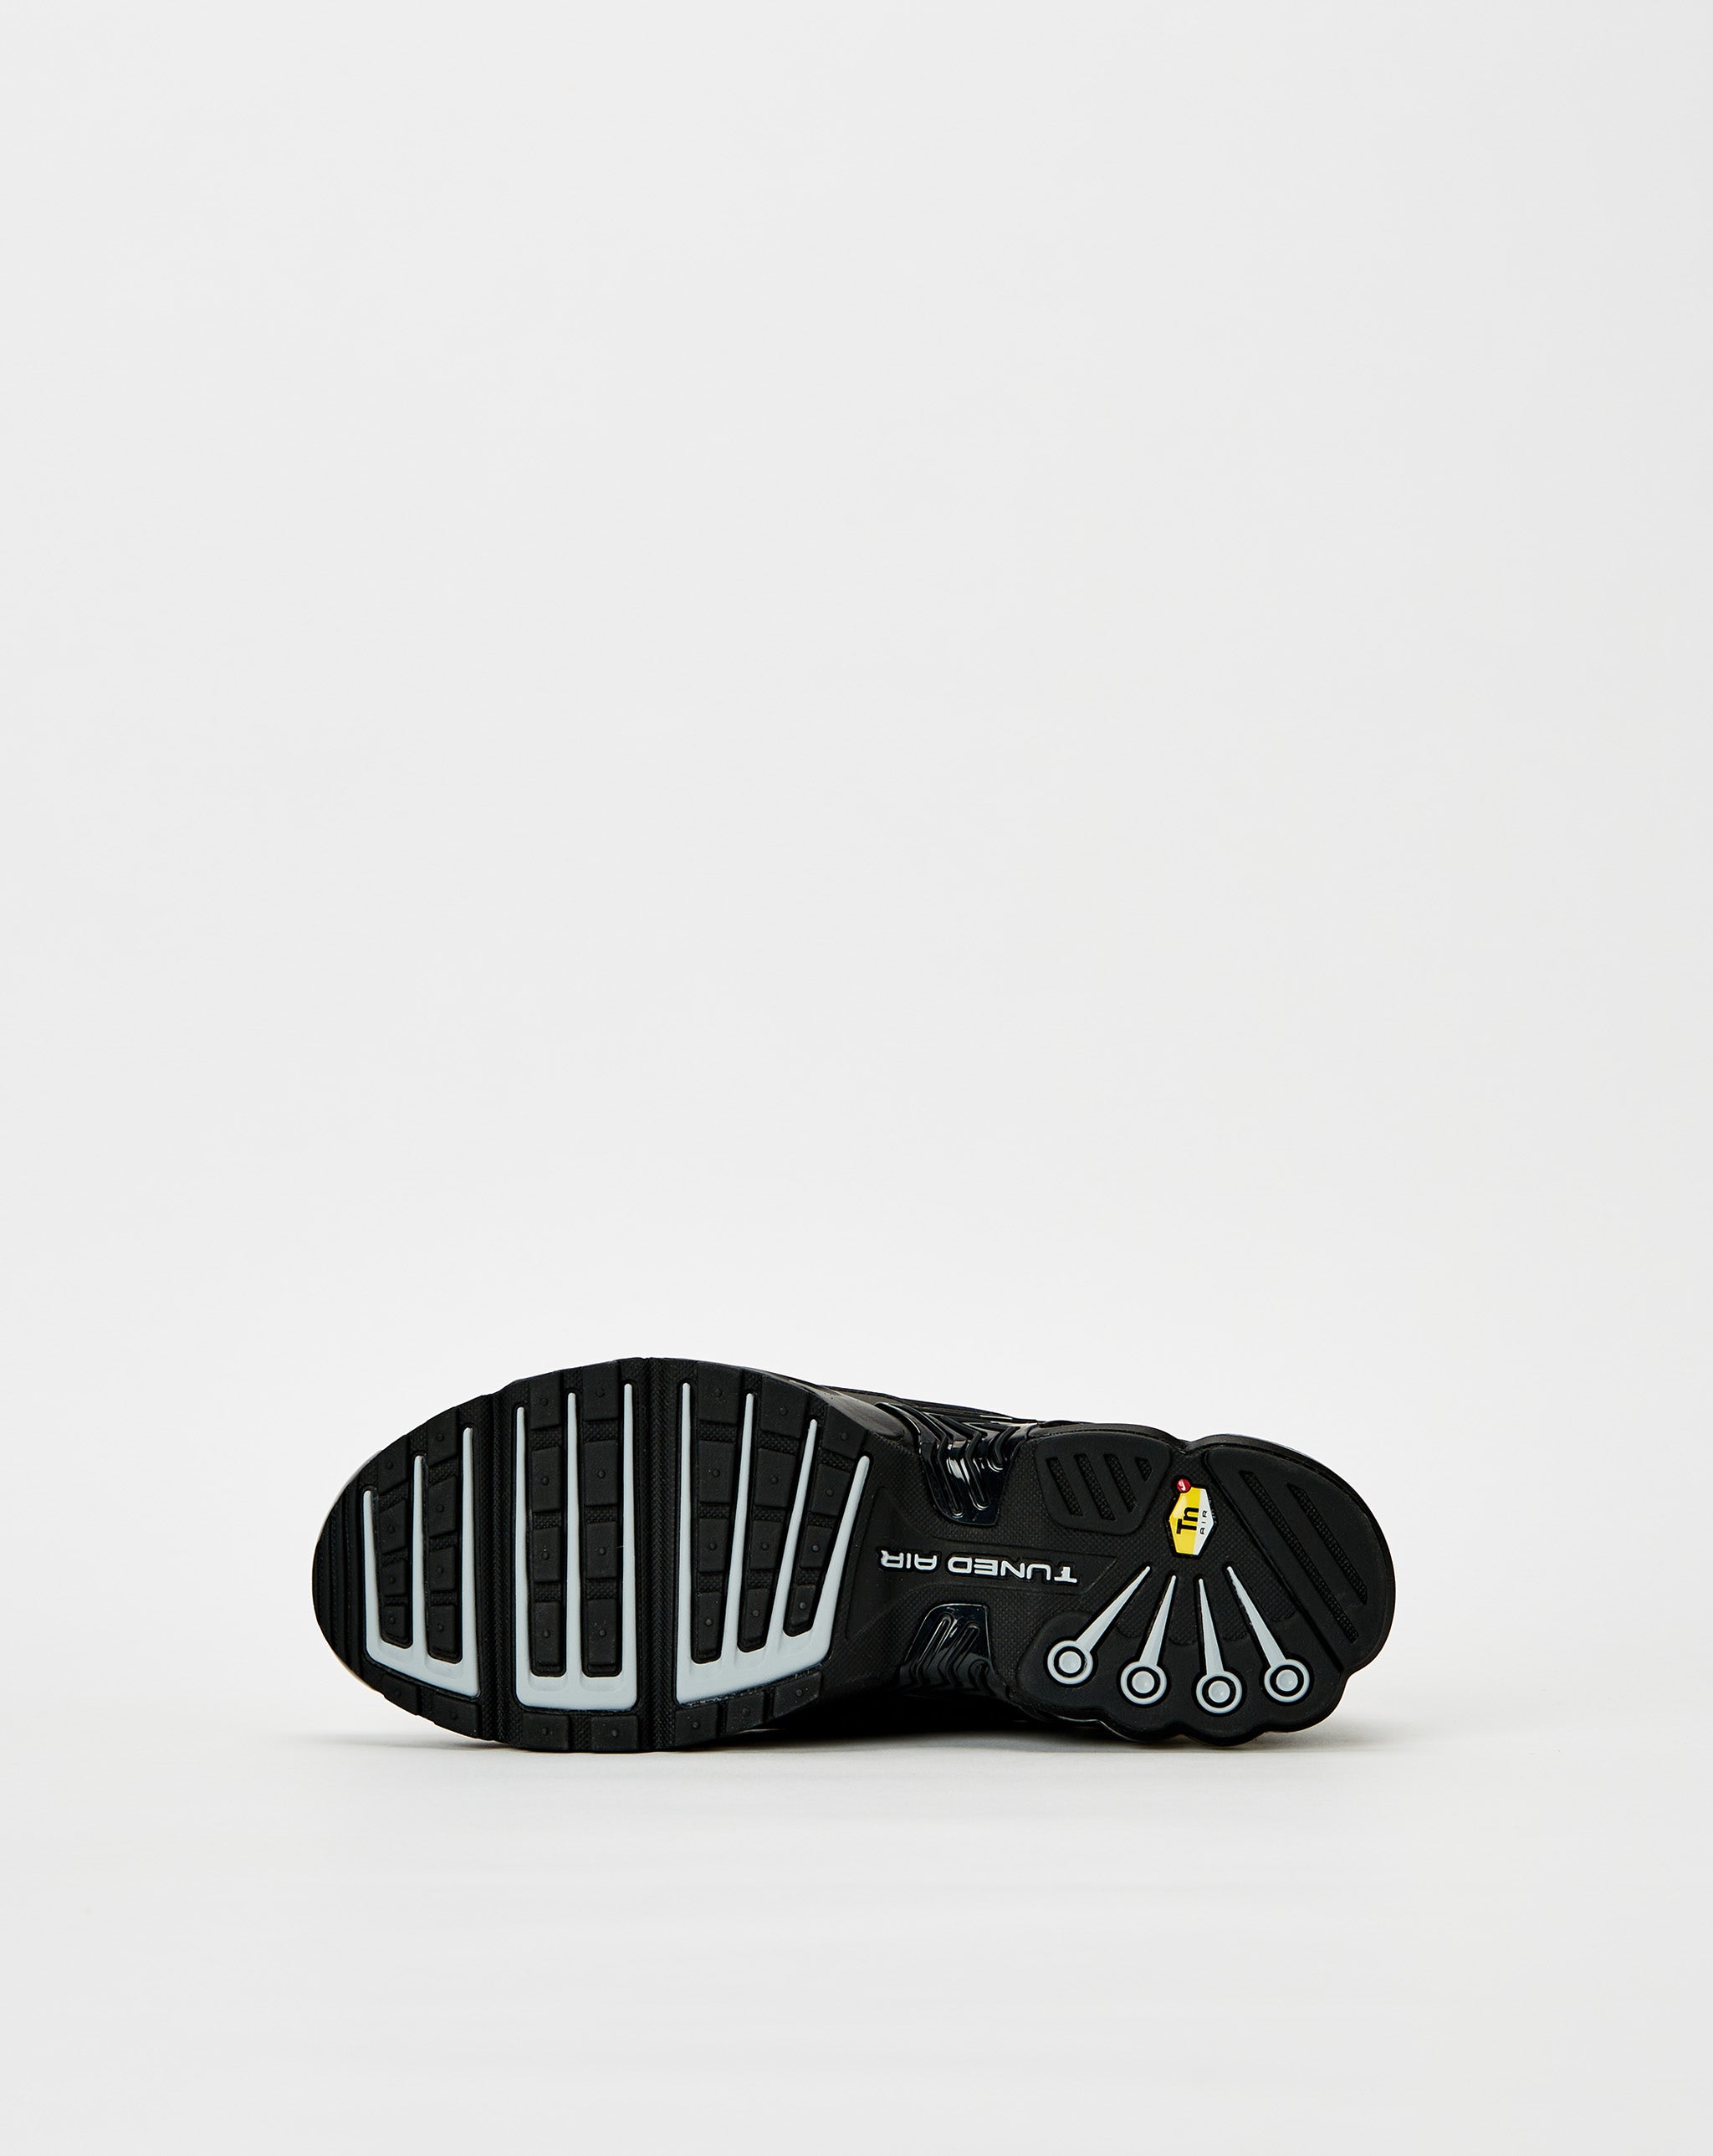 Nike cheap nike fly knit pants size chart shoes kids  - Cheap Erlebniswelt-fliegenfischen Jordan outlet